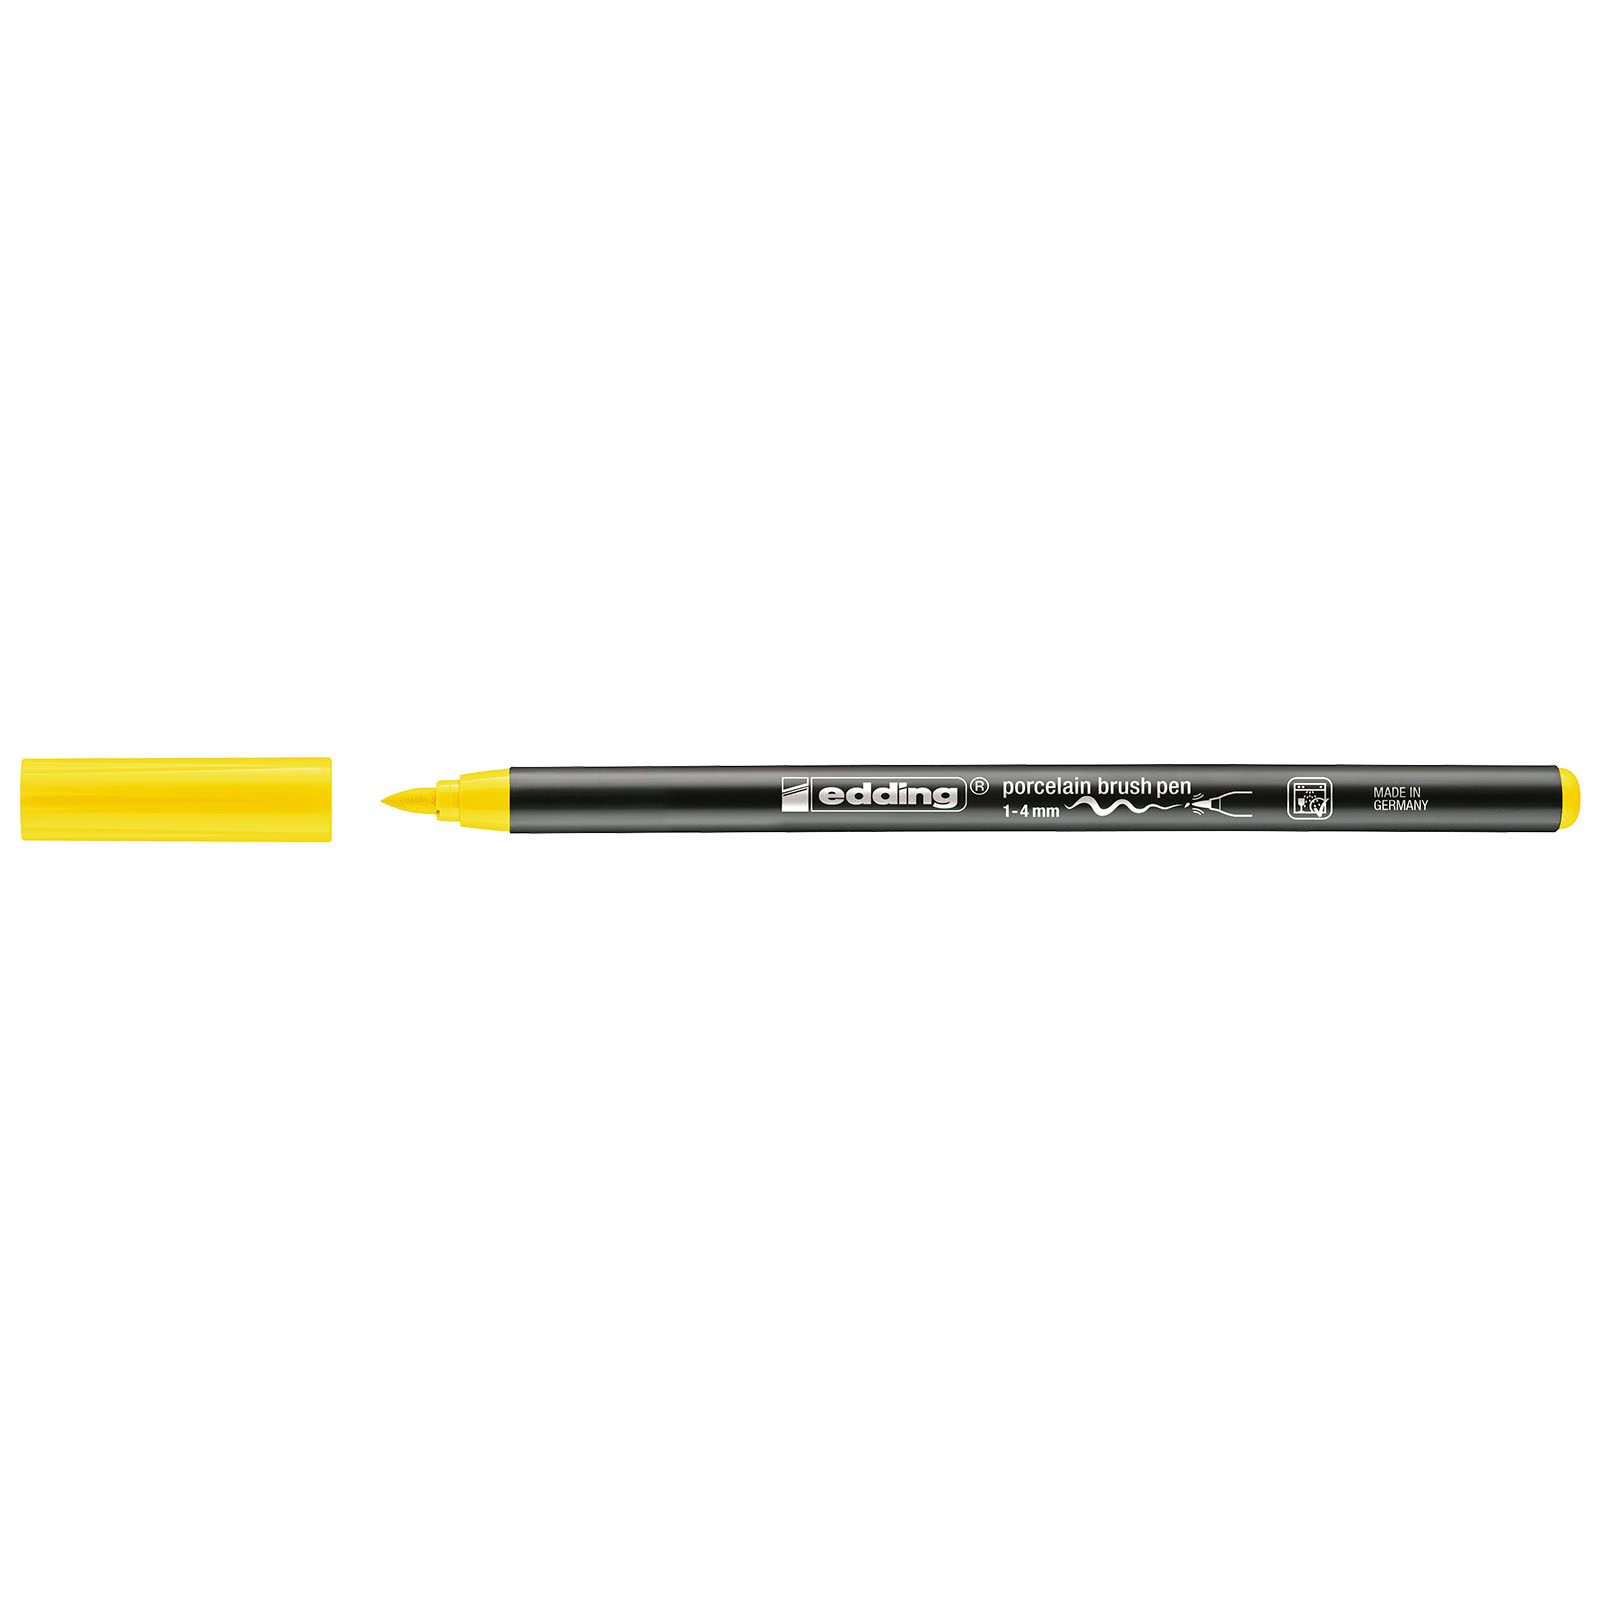 Edding 4200 • Porzellanpinselstift 1-4mm Gelb